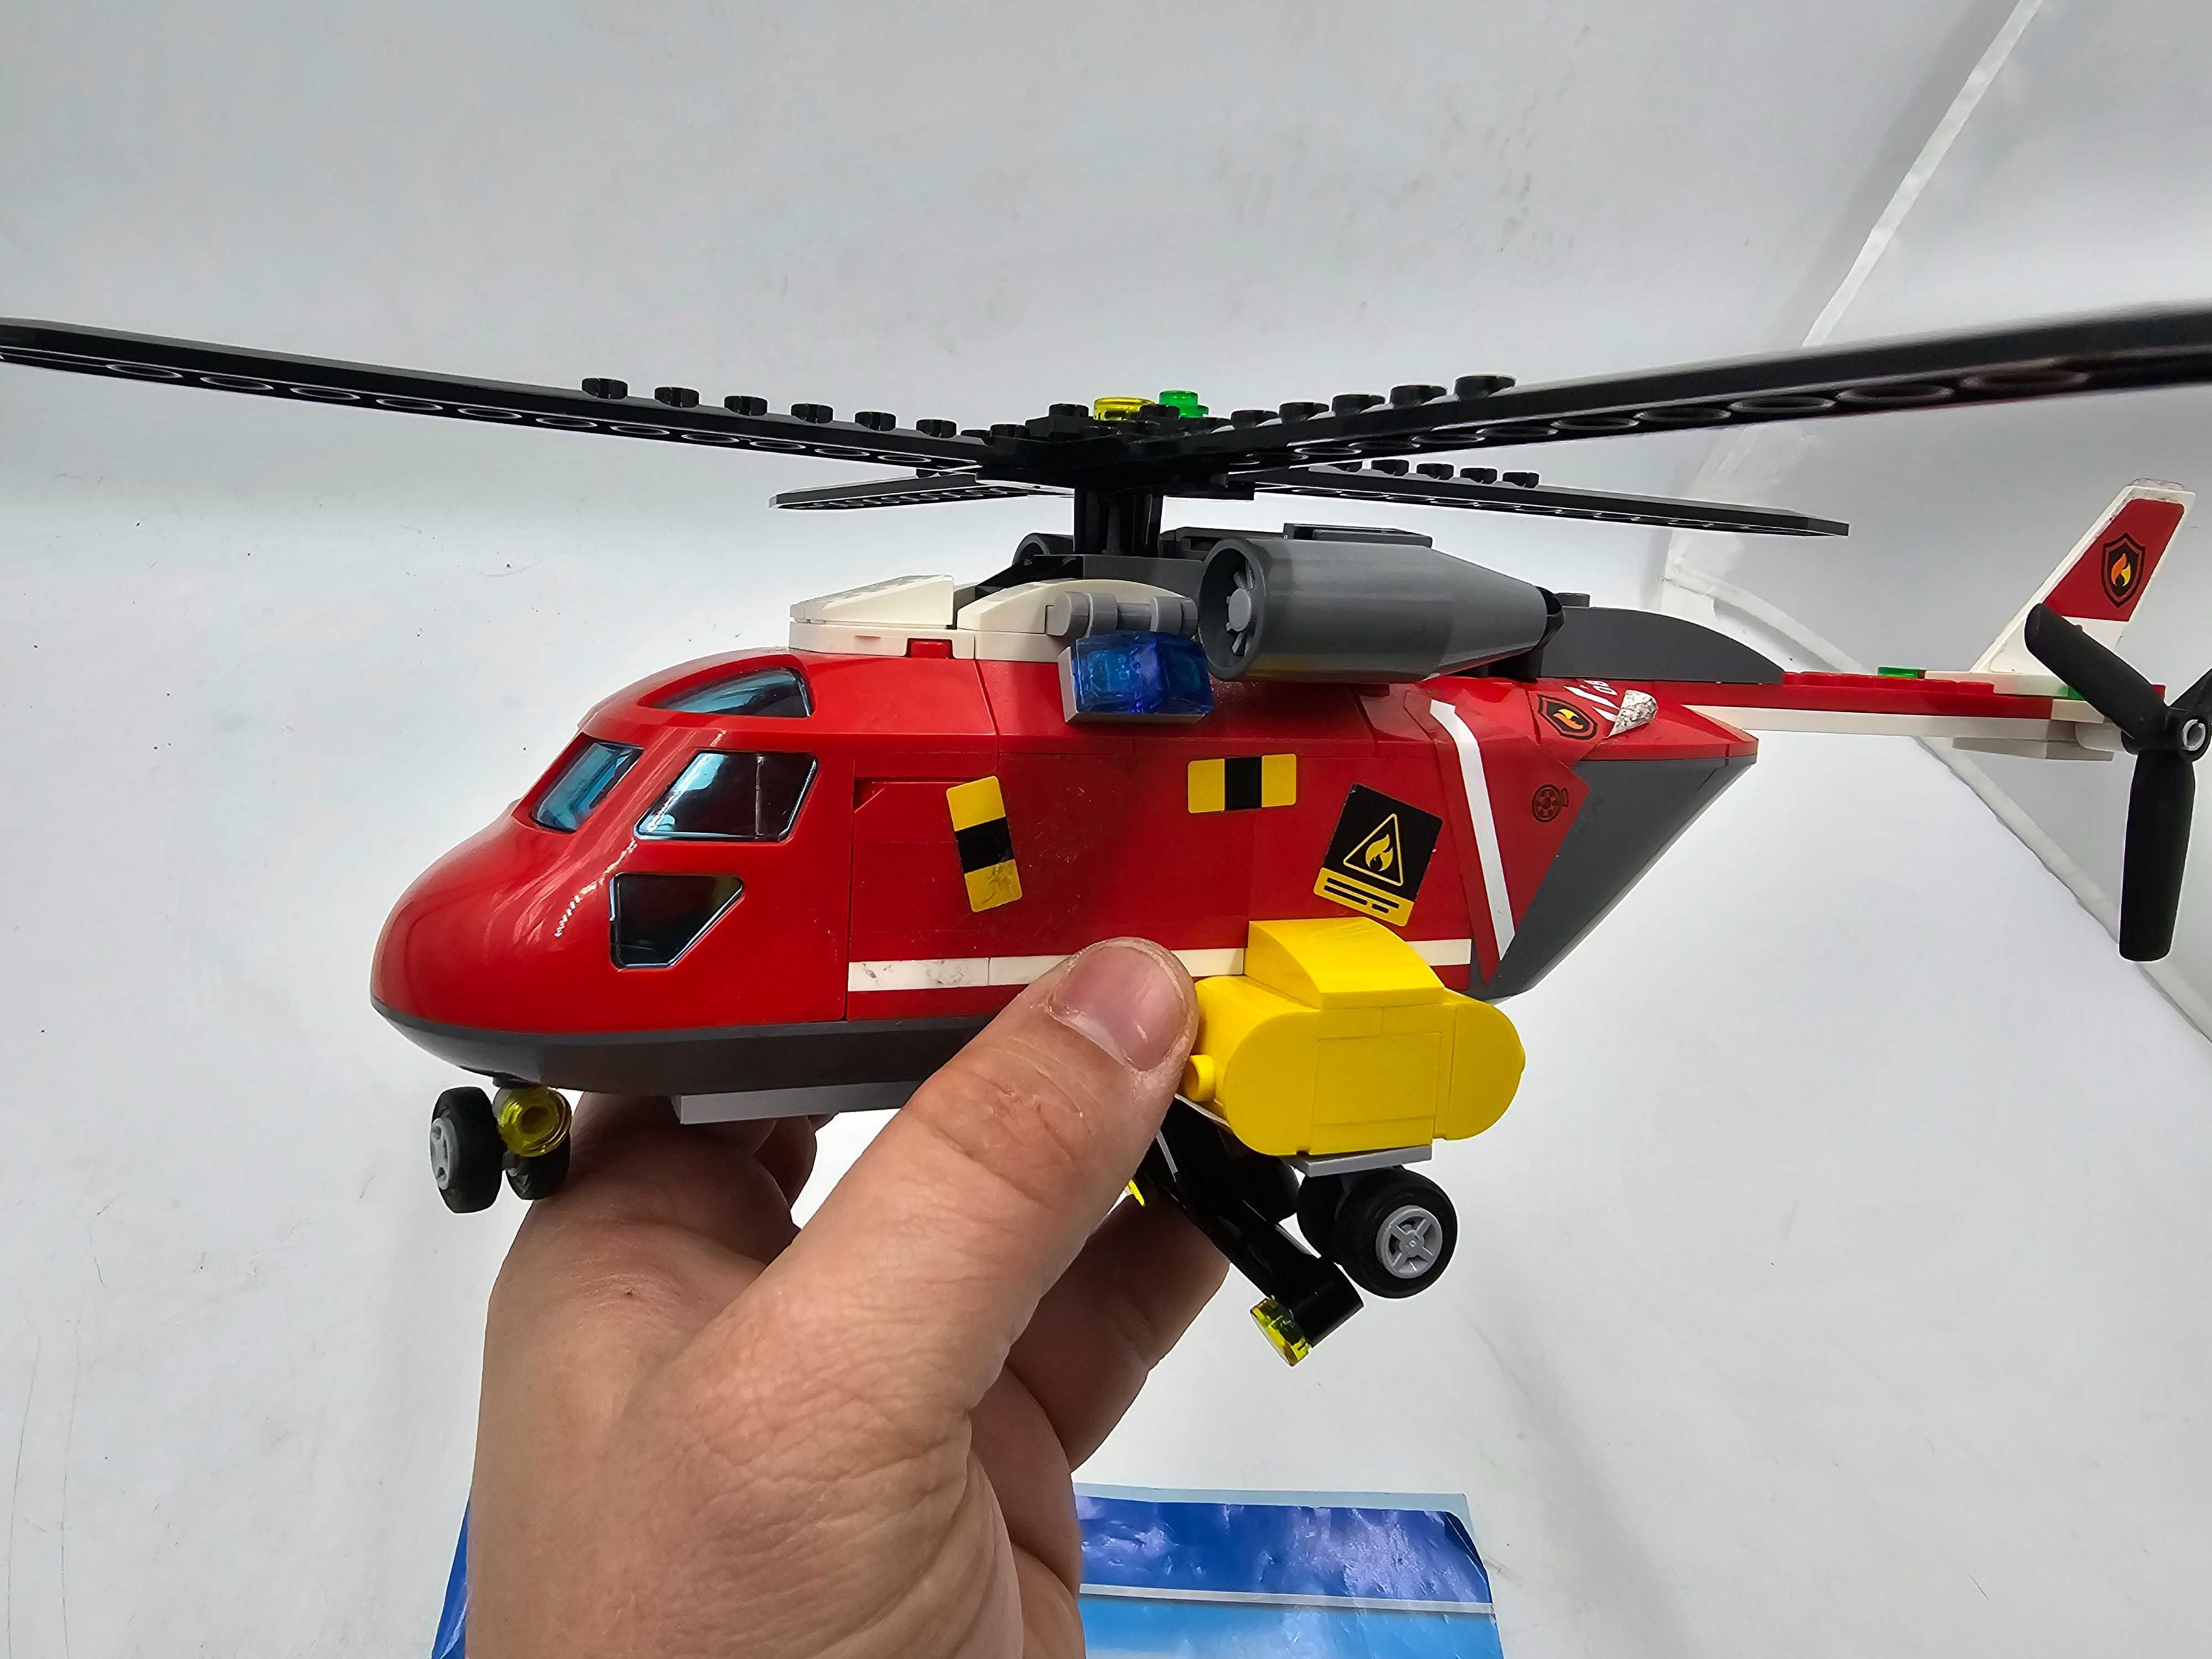 Lego City 60108 Helikopter strażacki